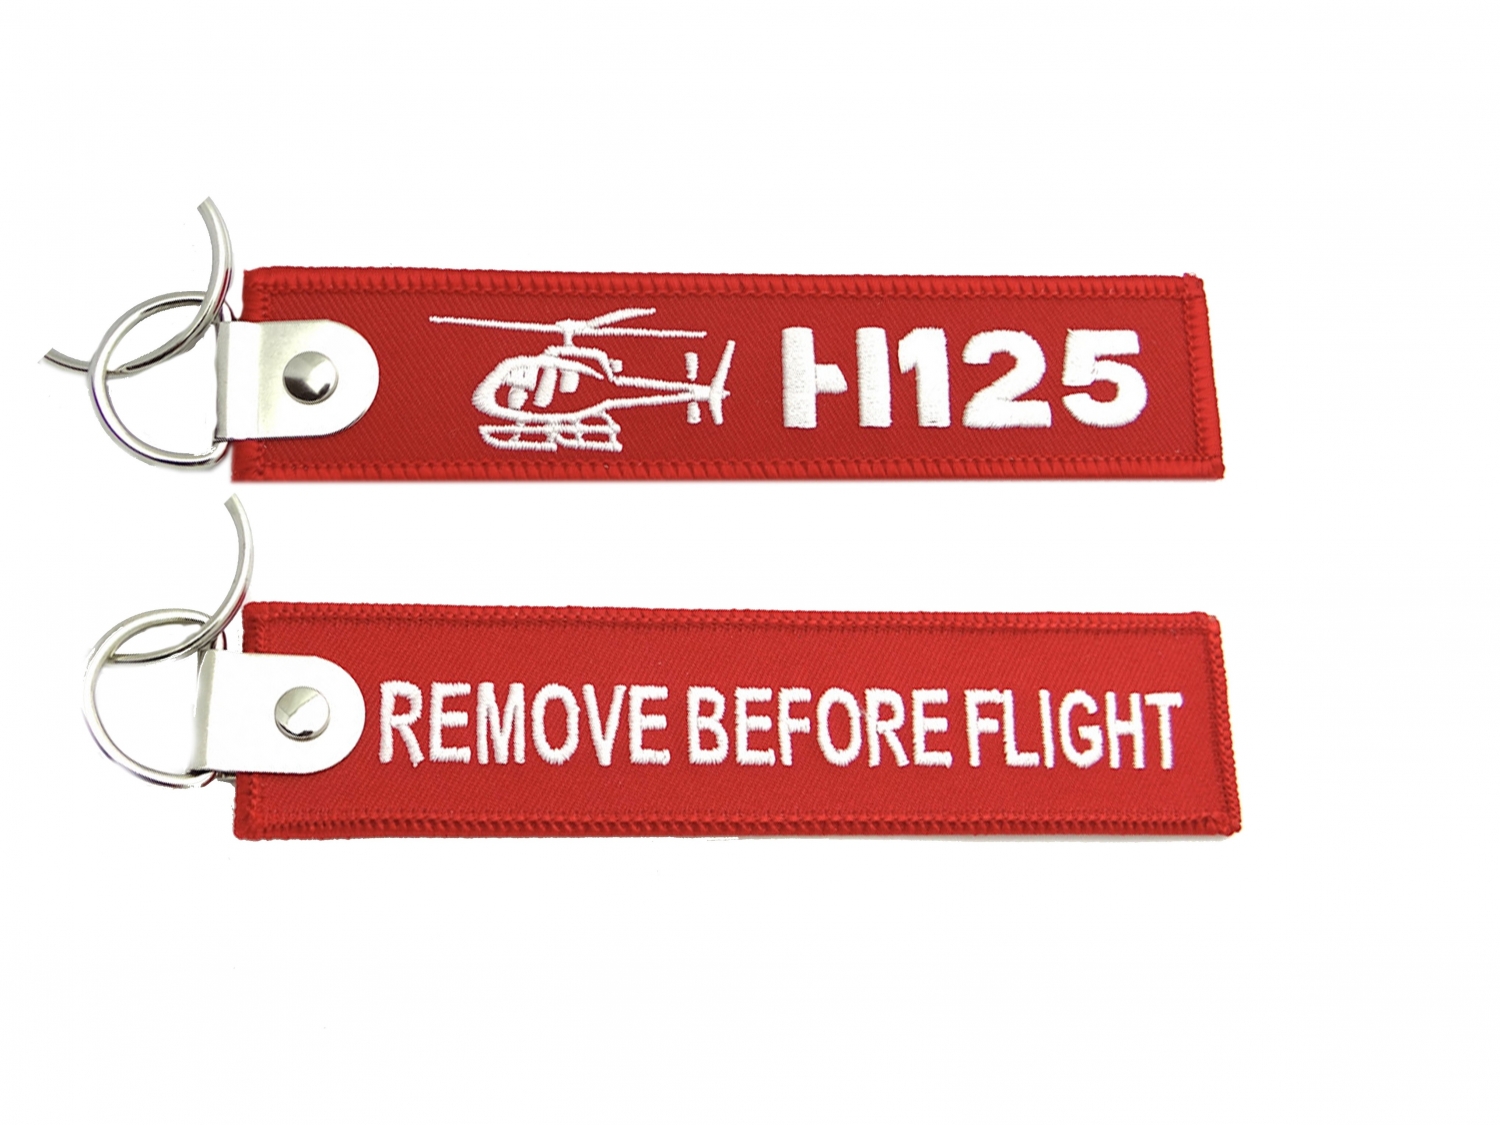 Брелок  REMOVE BEFORE FLIGHT -H125